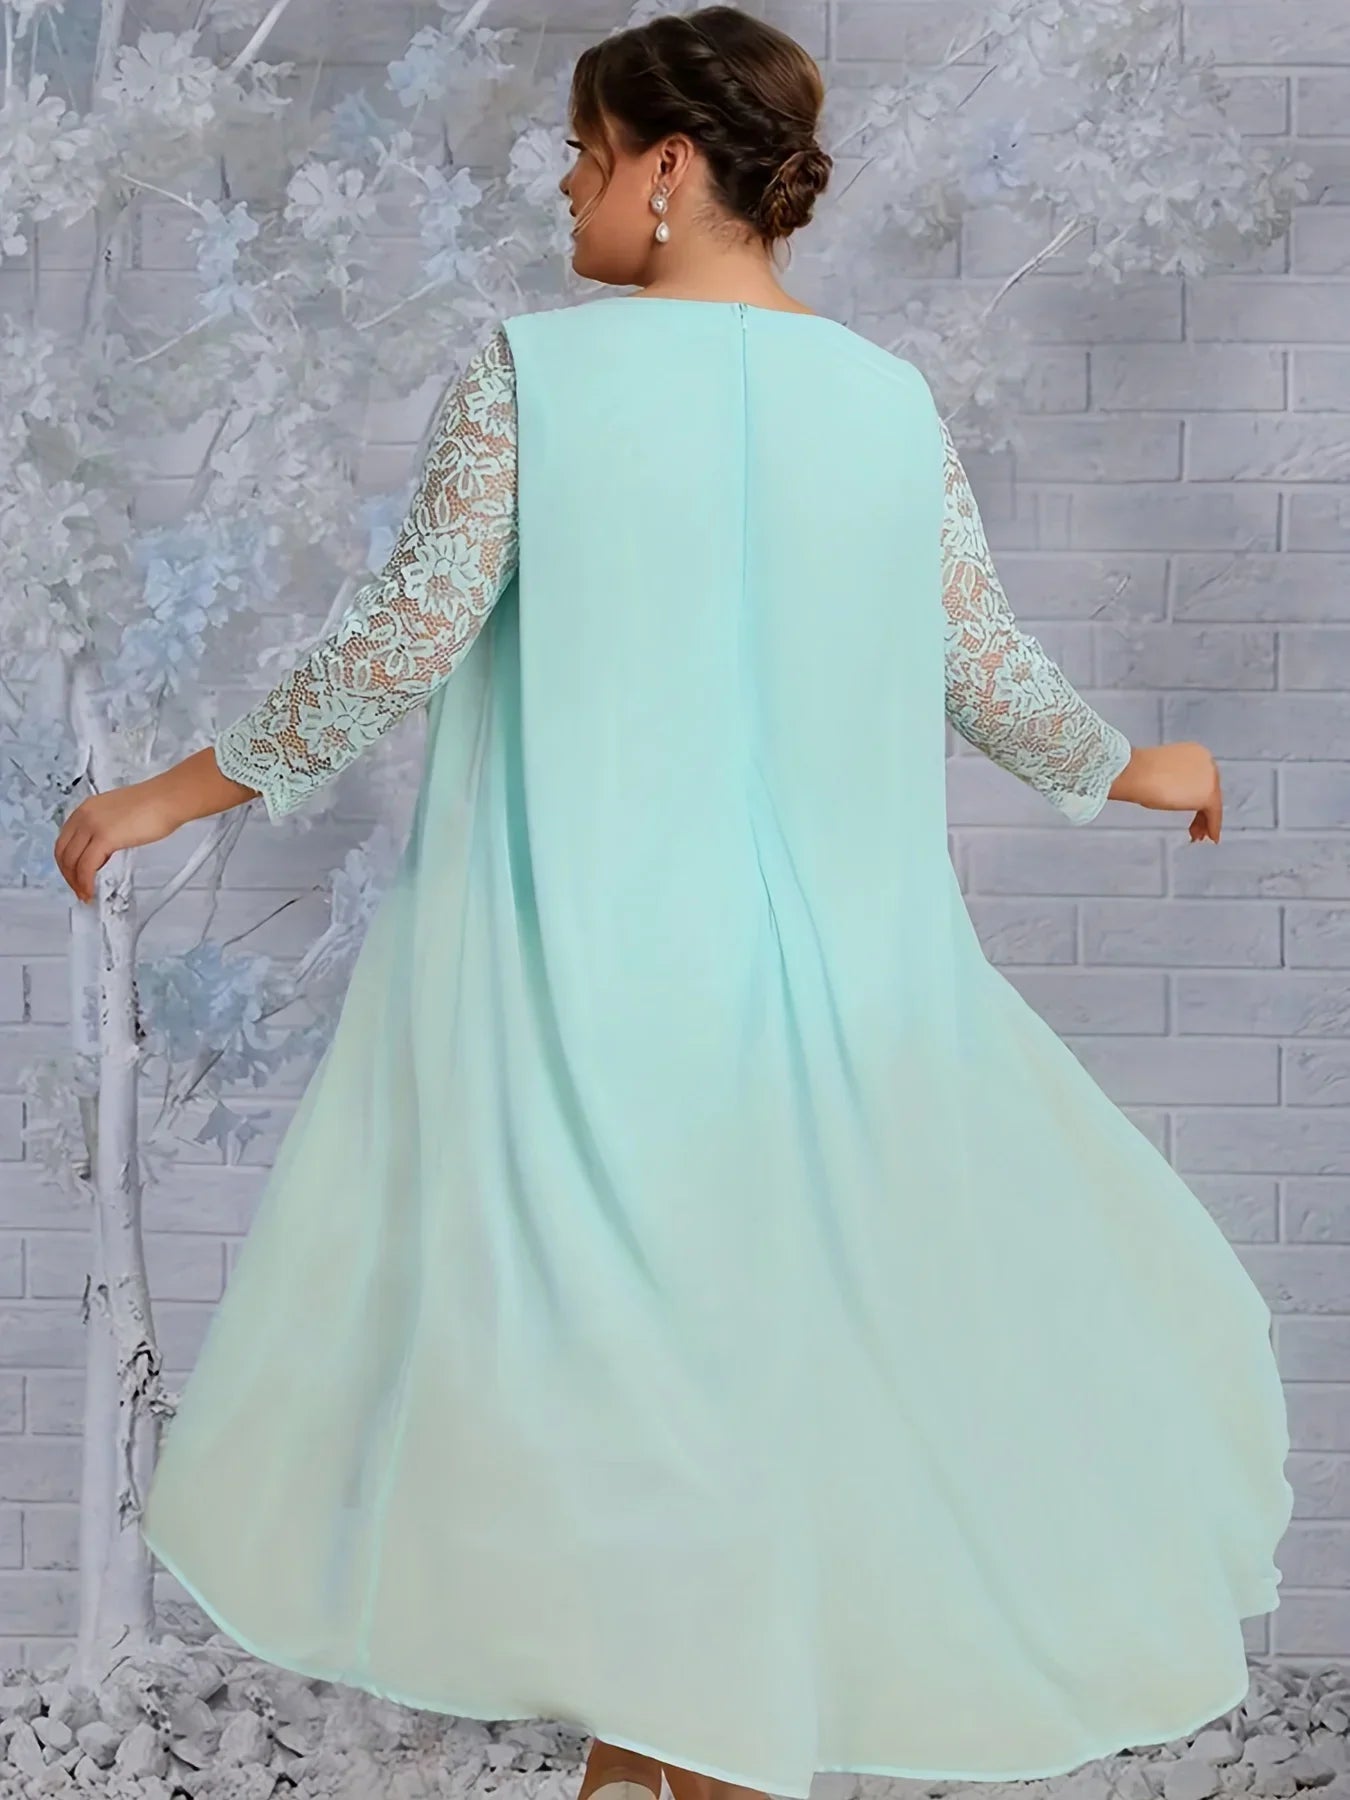 Plus Size Floral Jacquard Long Sleeve Layered Midi Dress, Women's Plus Medium Stretch Party Wedding Dress